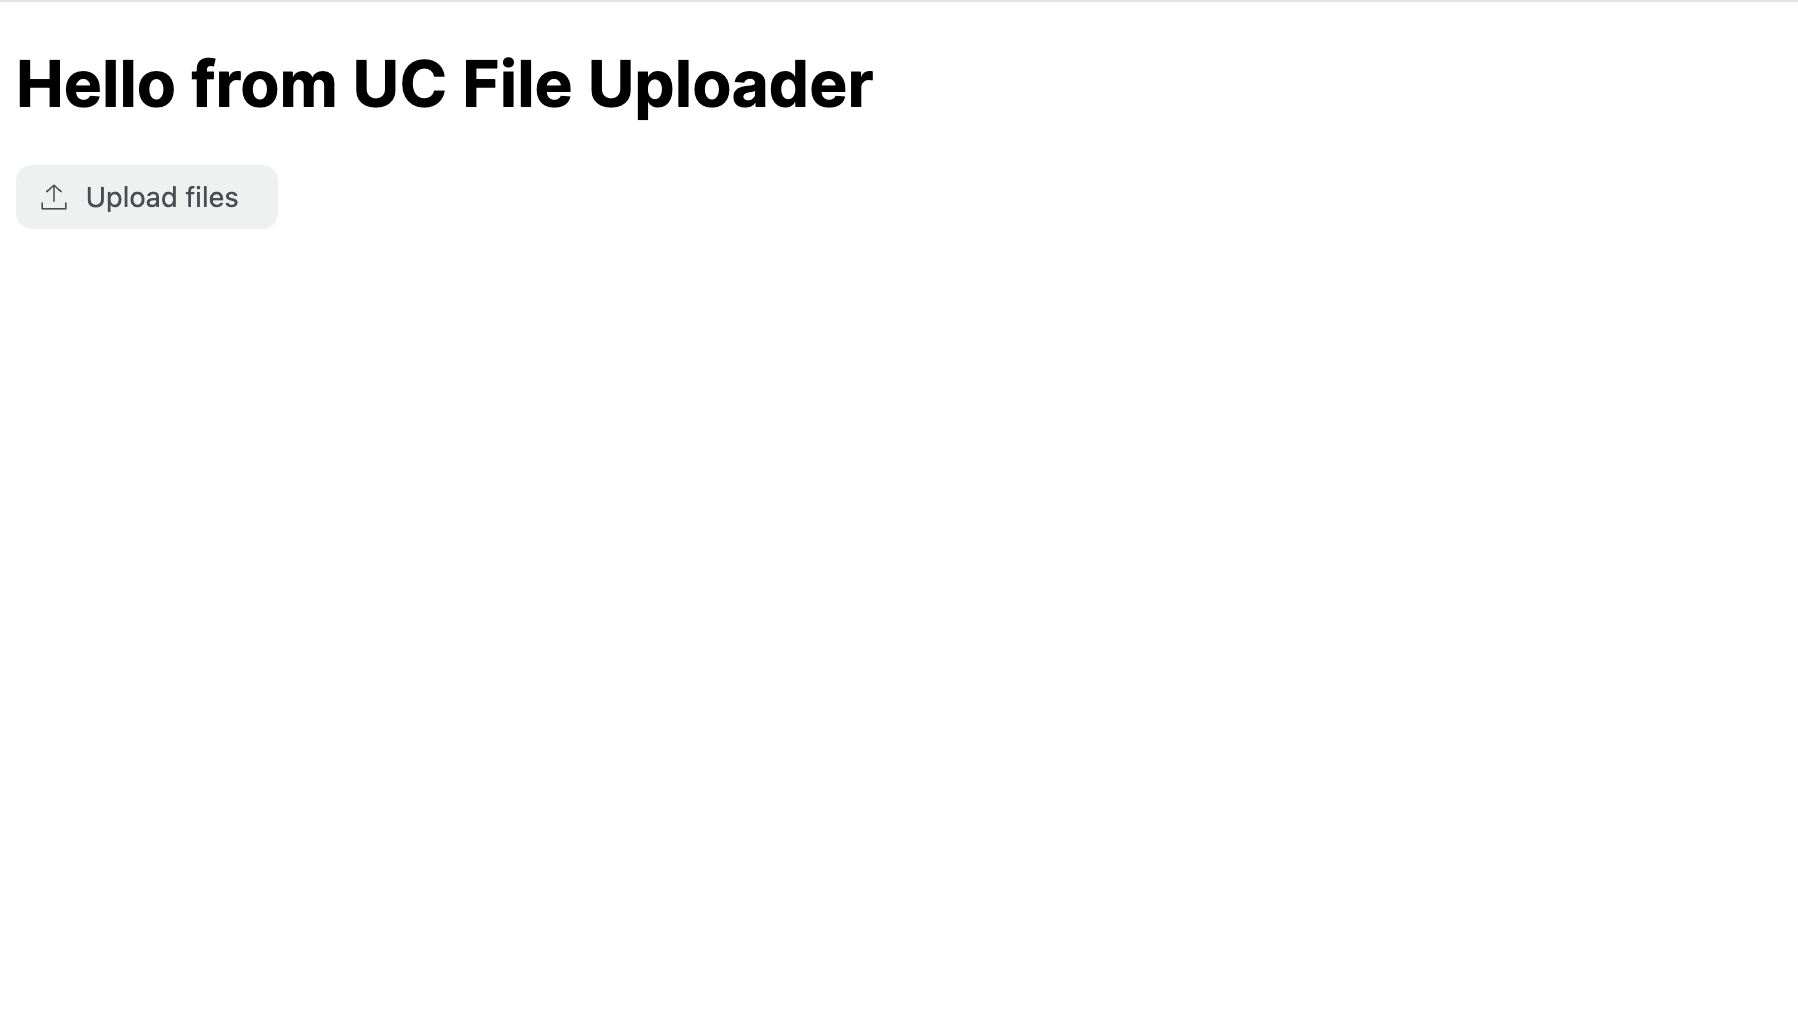 Landing page with File Uploader component